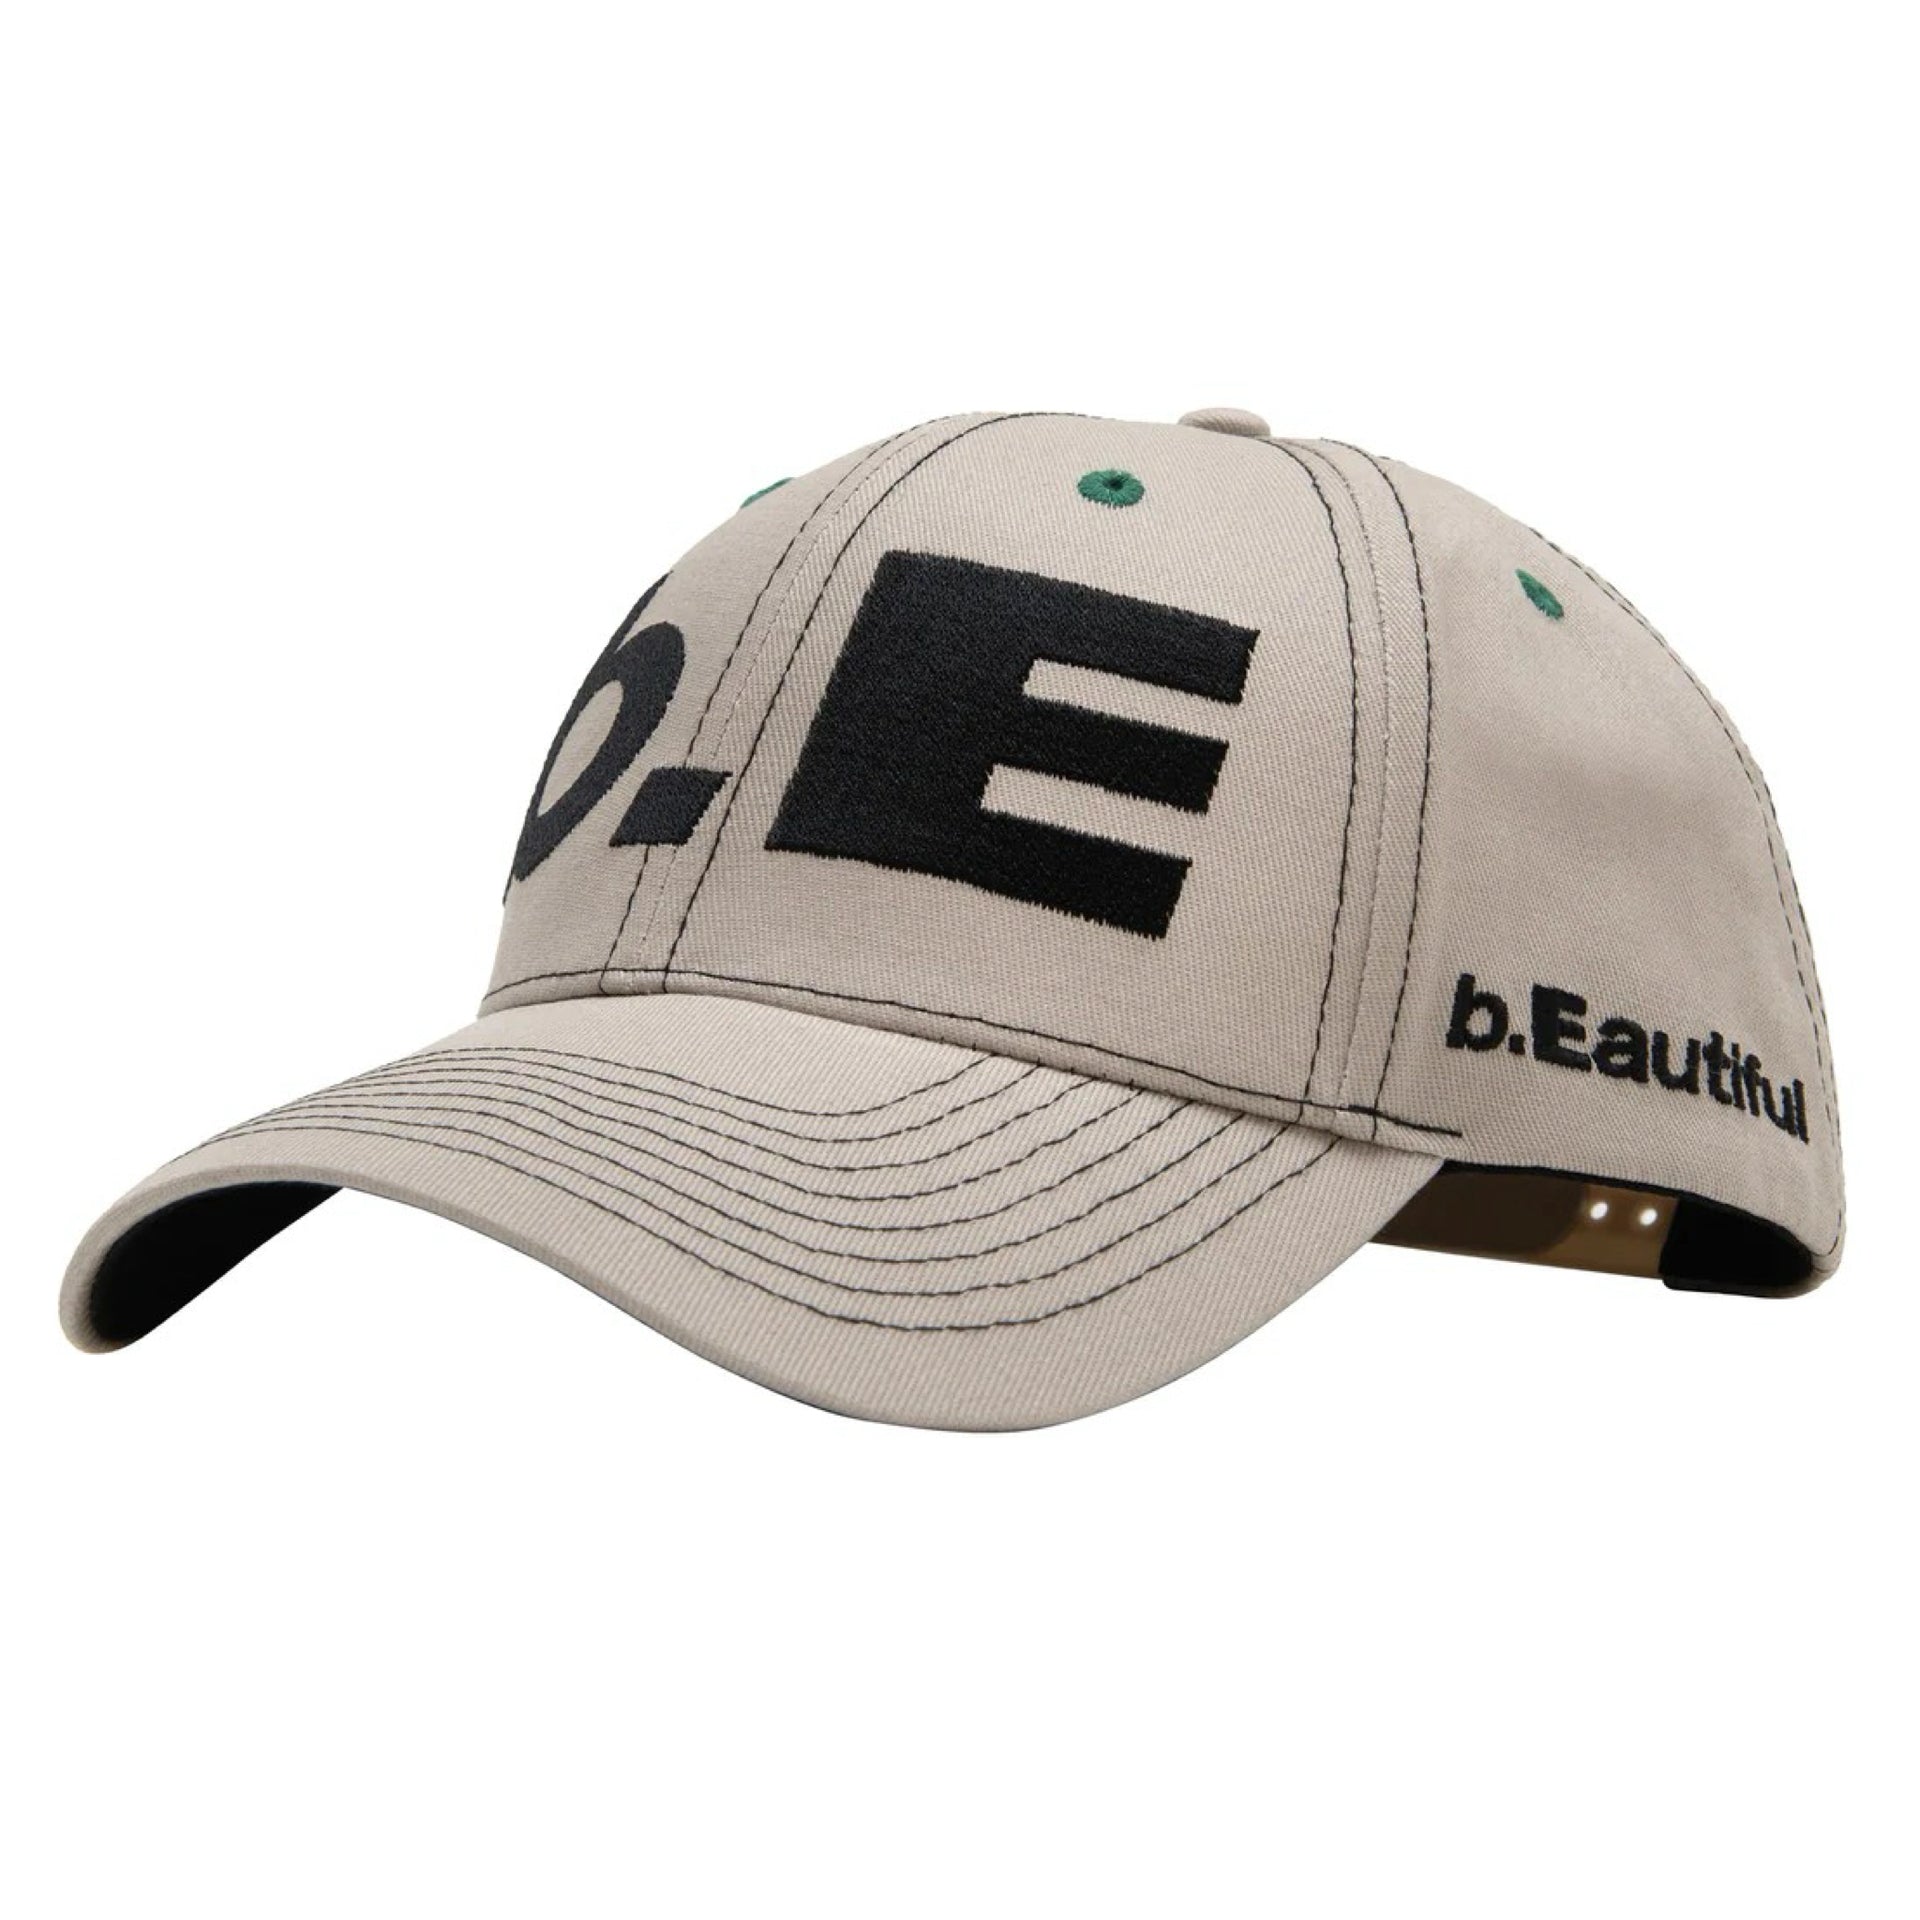 b.Eautiful b.E Hat Cement